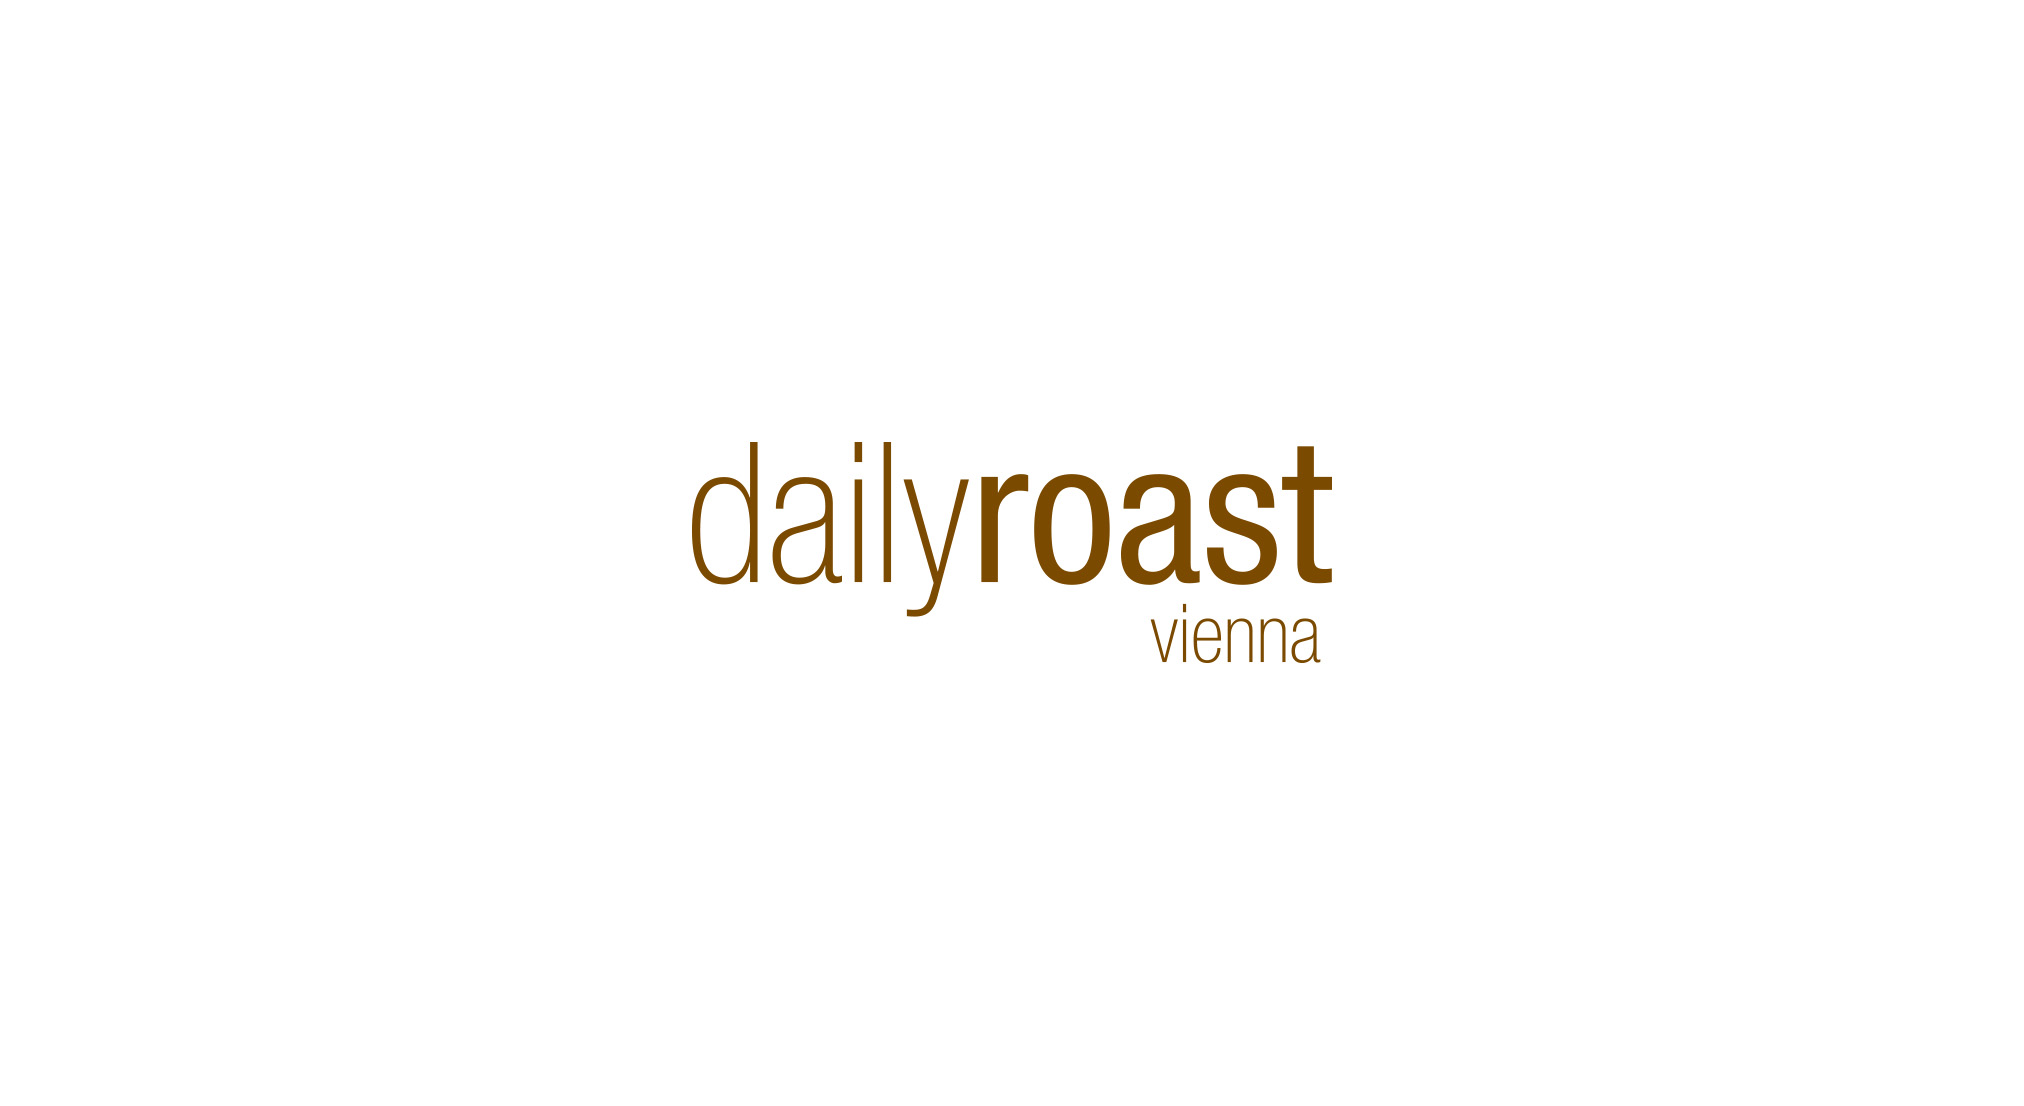 daily roast vienna kaffeebrauner Grotesk Schriftzug 